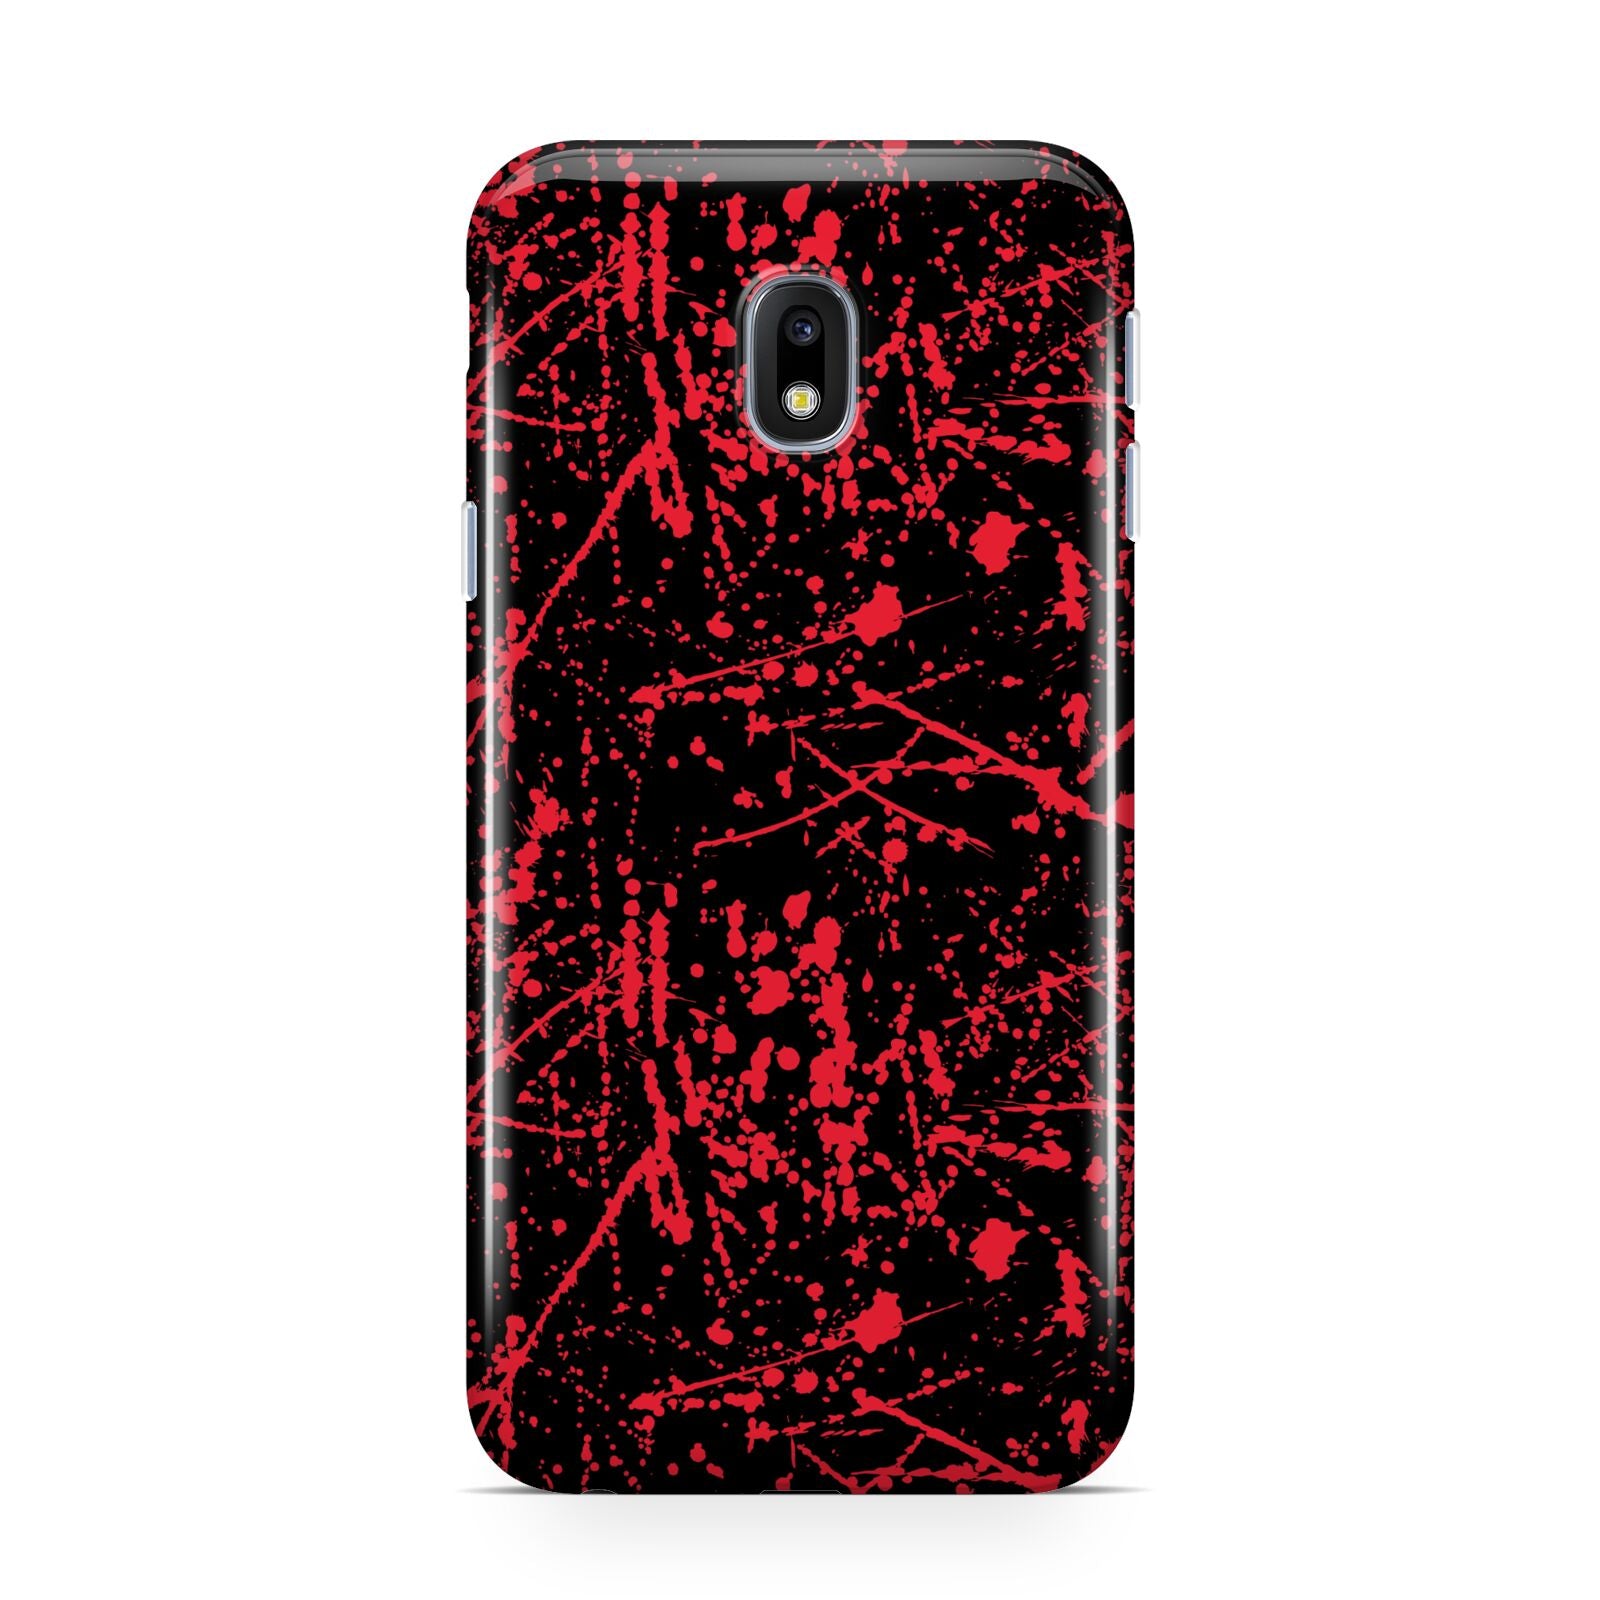 Blood Splatters Samsung Galaxy J3 2017 Case